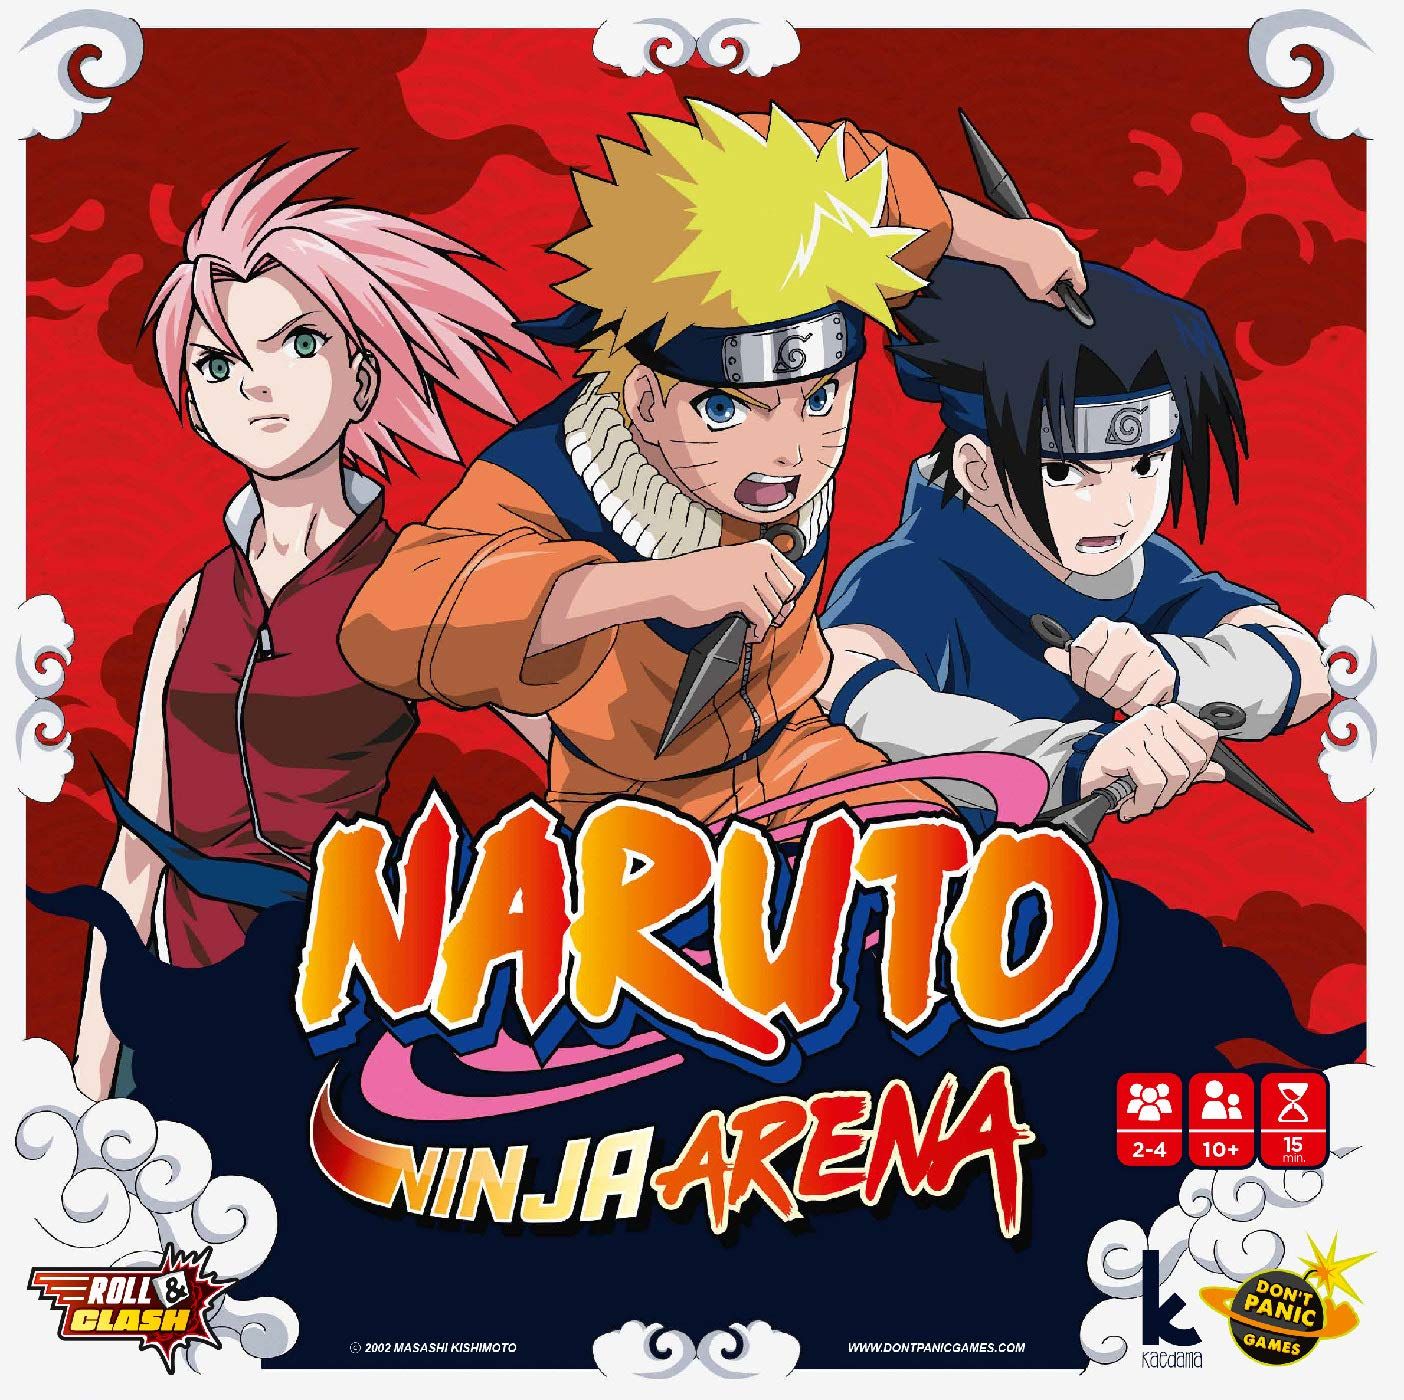 goodie - Naruto Ninja Arena